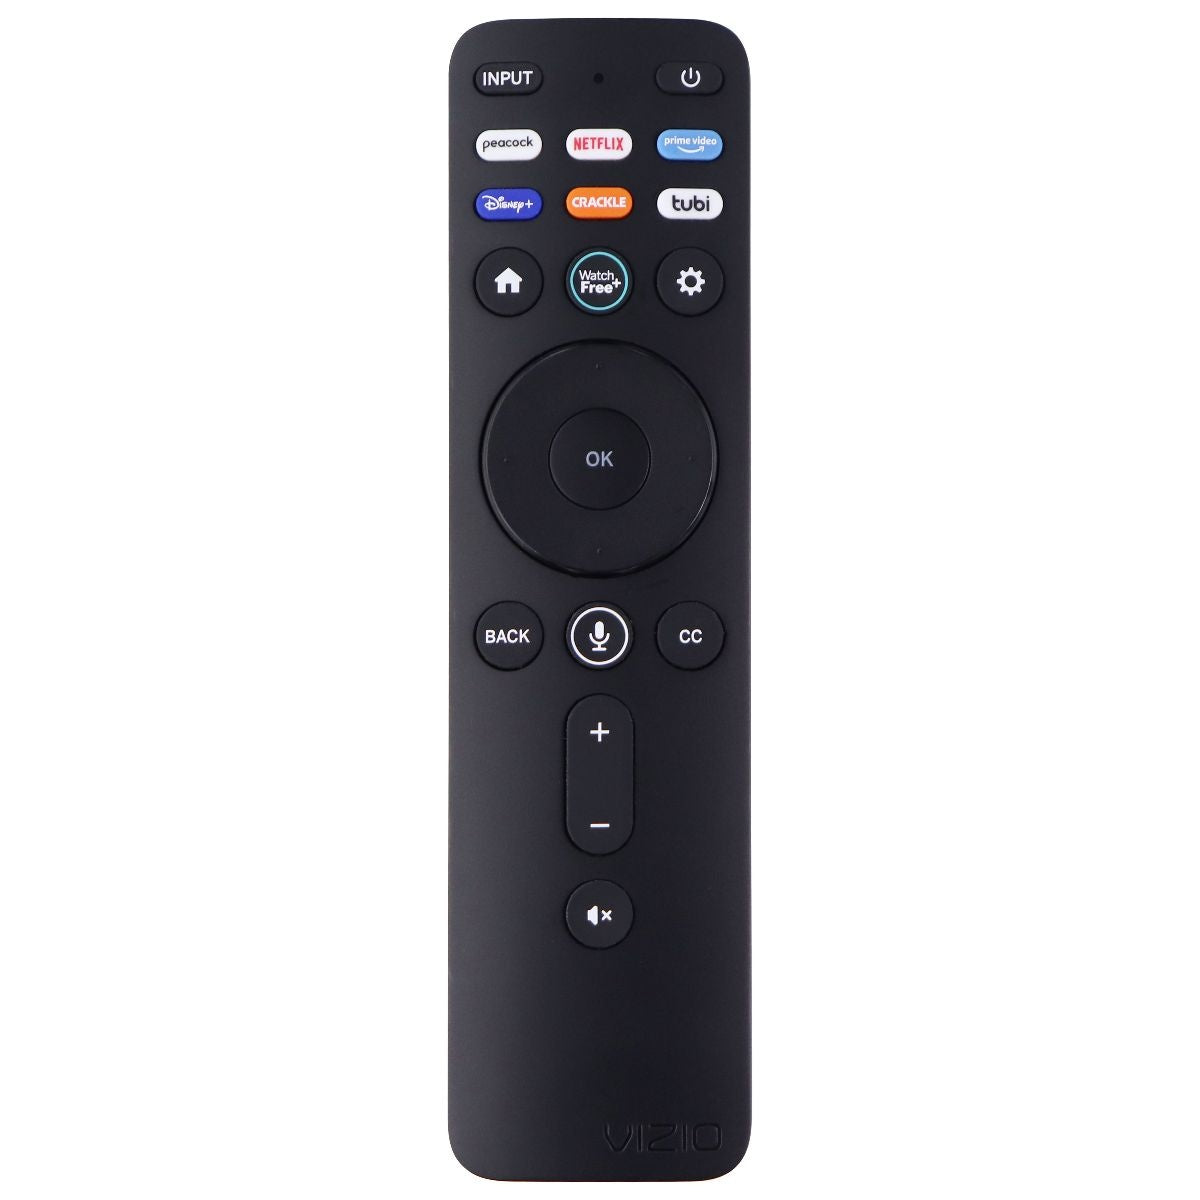 Vizio Remote Control (XRT260) peacock/Netflix/prime/Disney/Crackle/Tubi - Black TV, Video & Audio Accessories - Remote Controls Vizio    - Simple Cell Bulk Wholesale Pricing - USA Seller